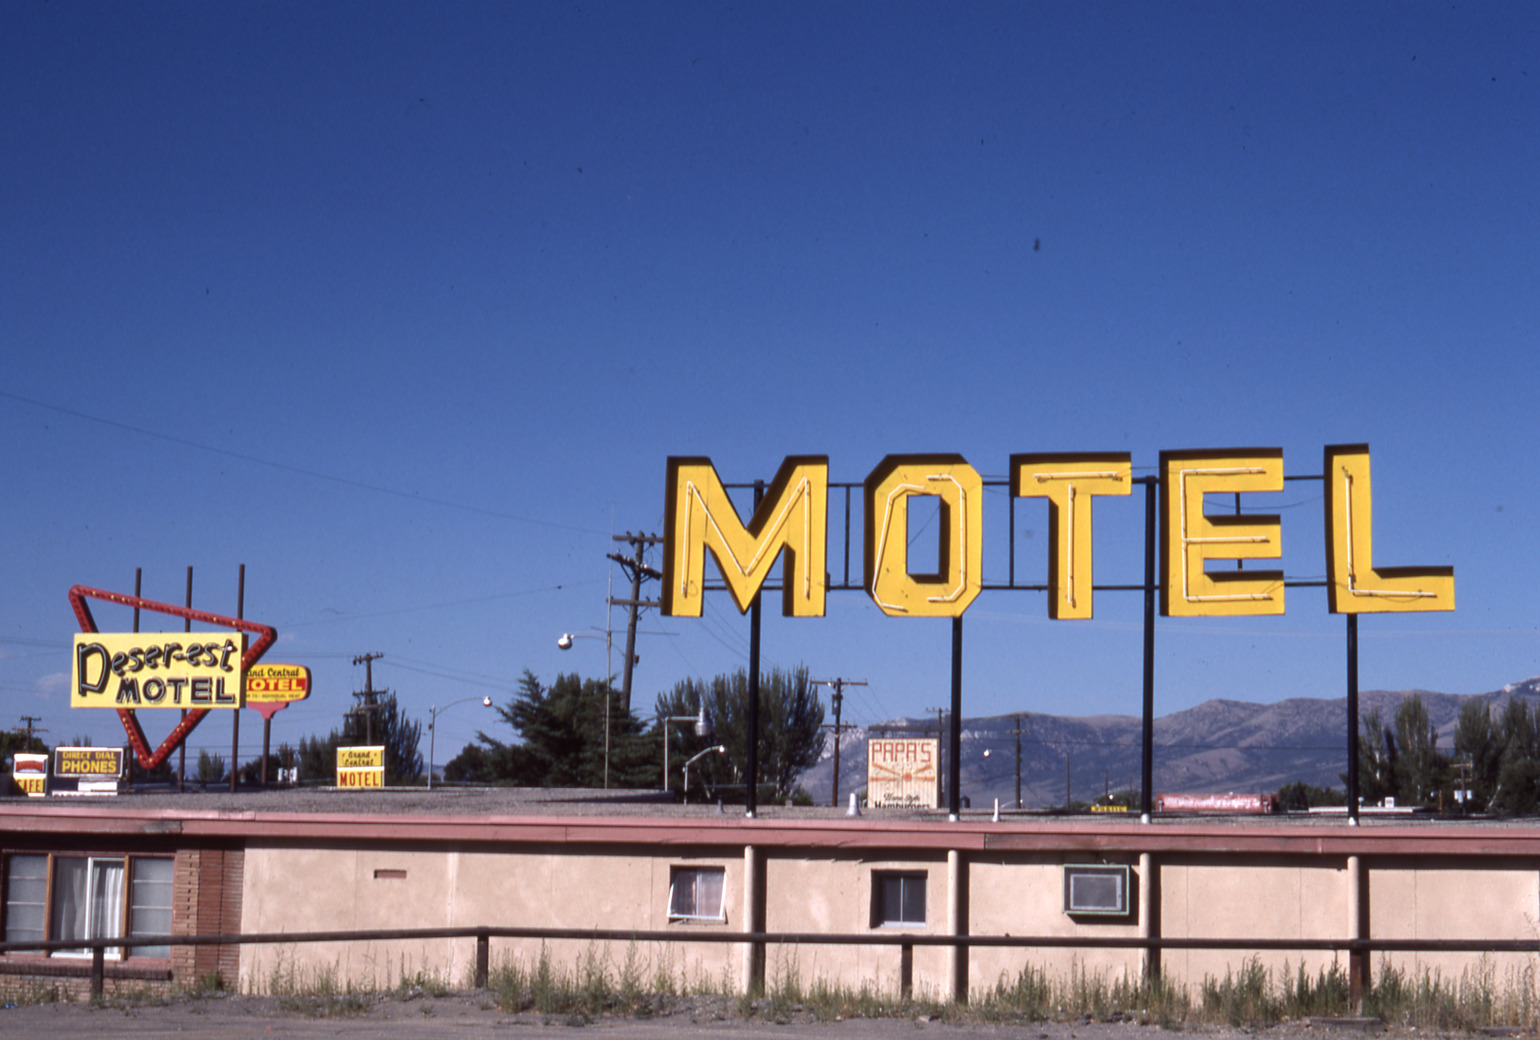 Deser-est Motel pylon sign, Ely, Nevada: photographic print